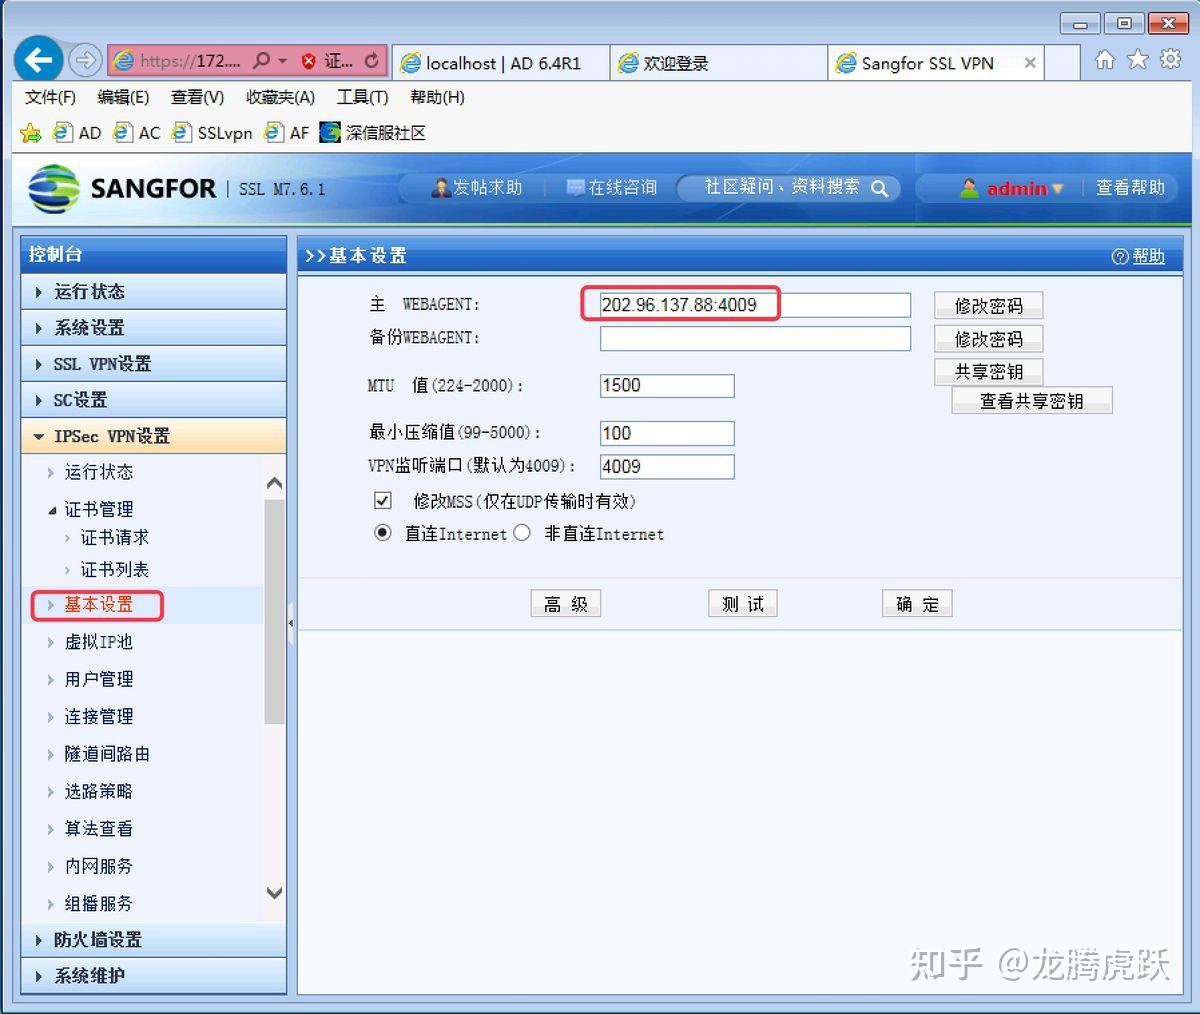 Sangfor vpn linux server kerio control vpn client 8.0.0 551 win32 error